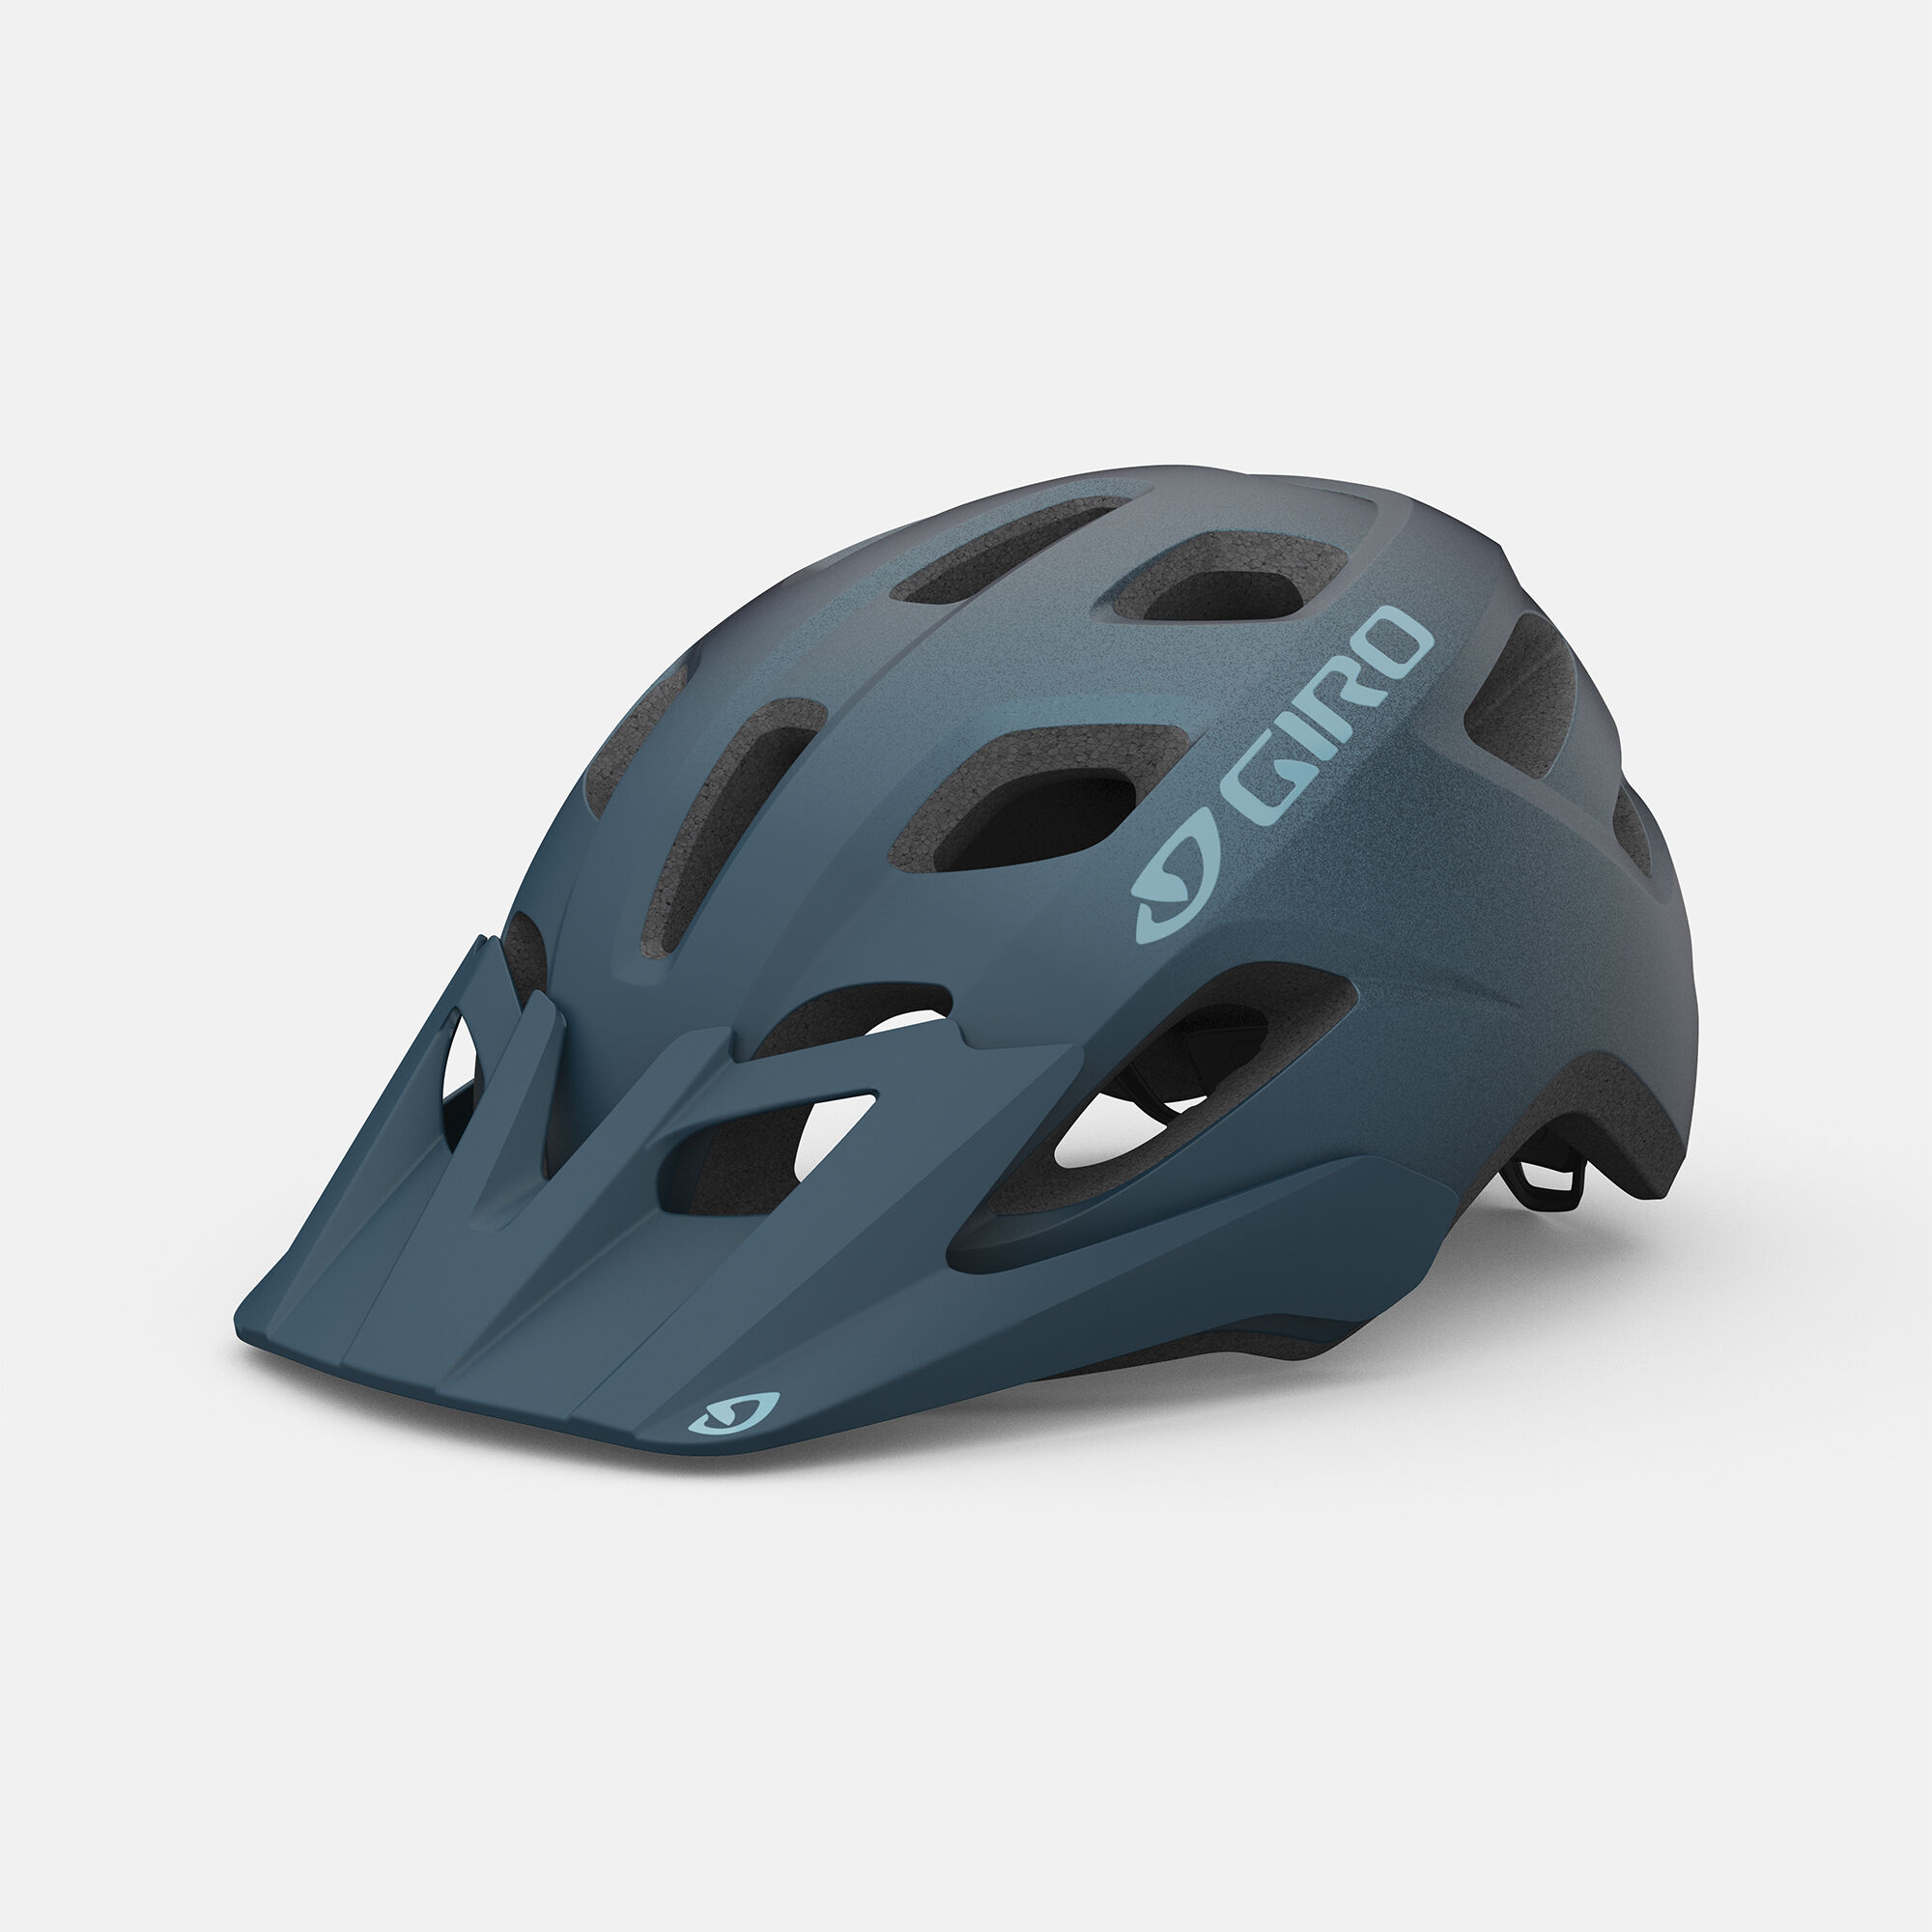 Details about   Fast shipping Giro Women's Verce Bike Helmet NEW 2021 